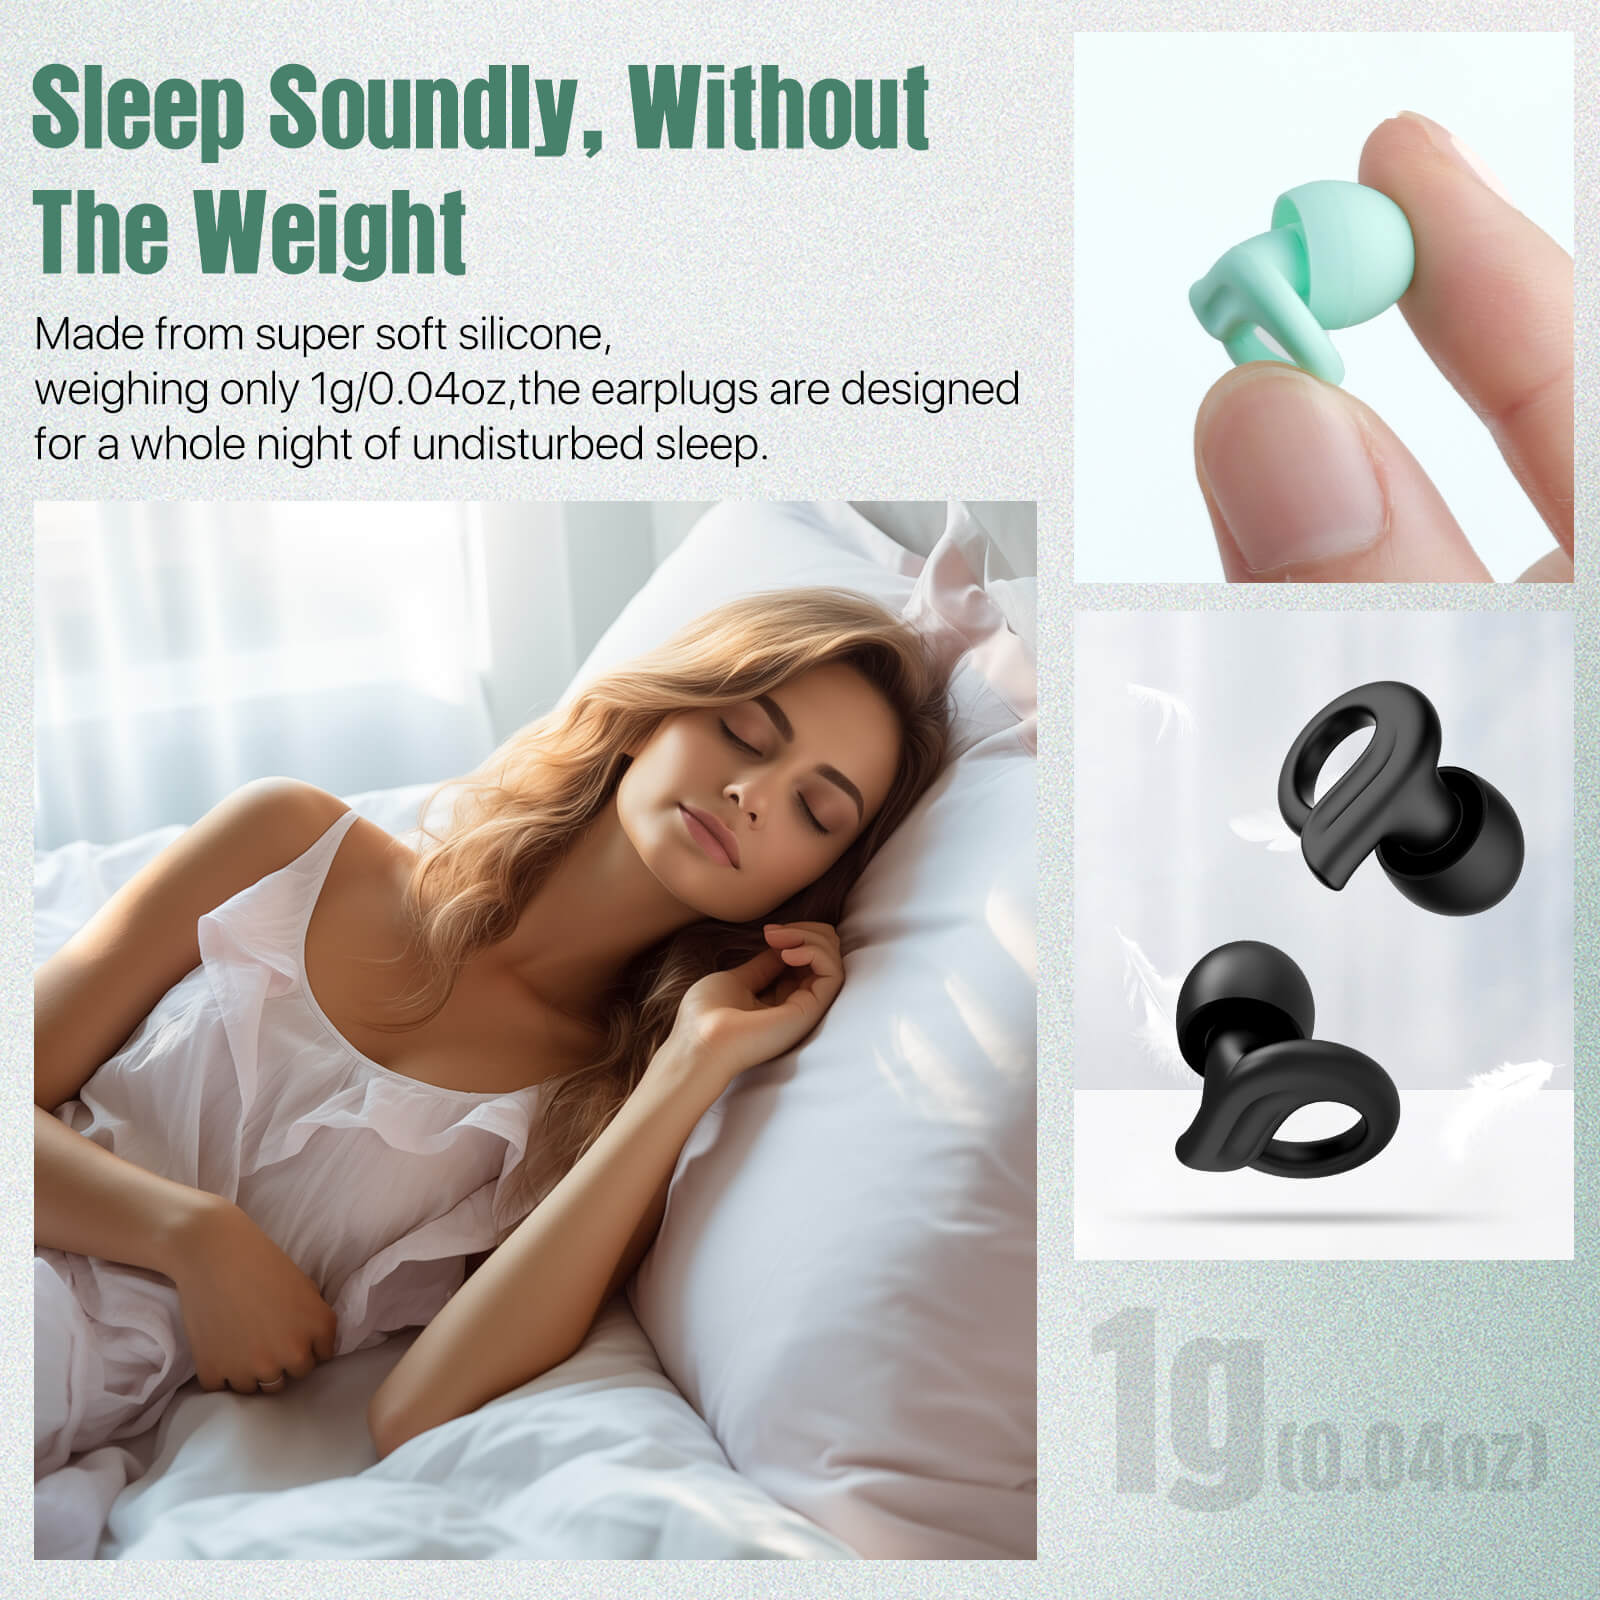 Hearprotek 29db Noise Reduction Sleeping Ear Plugs